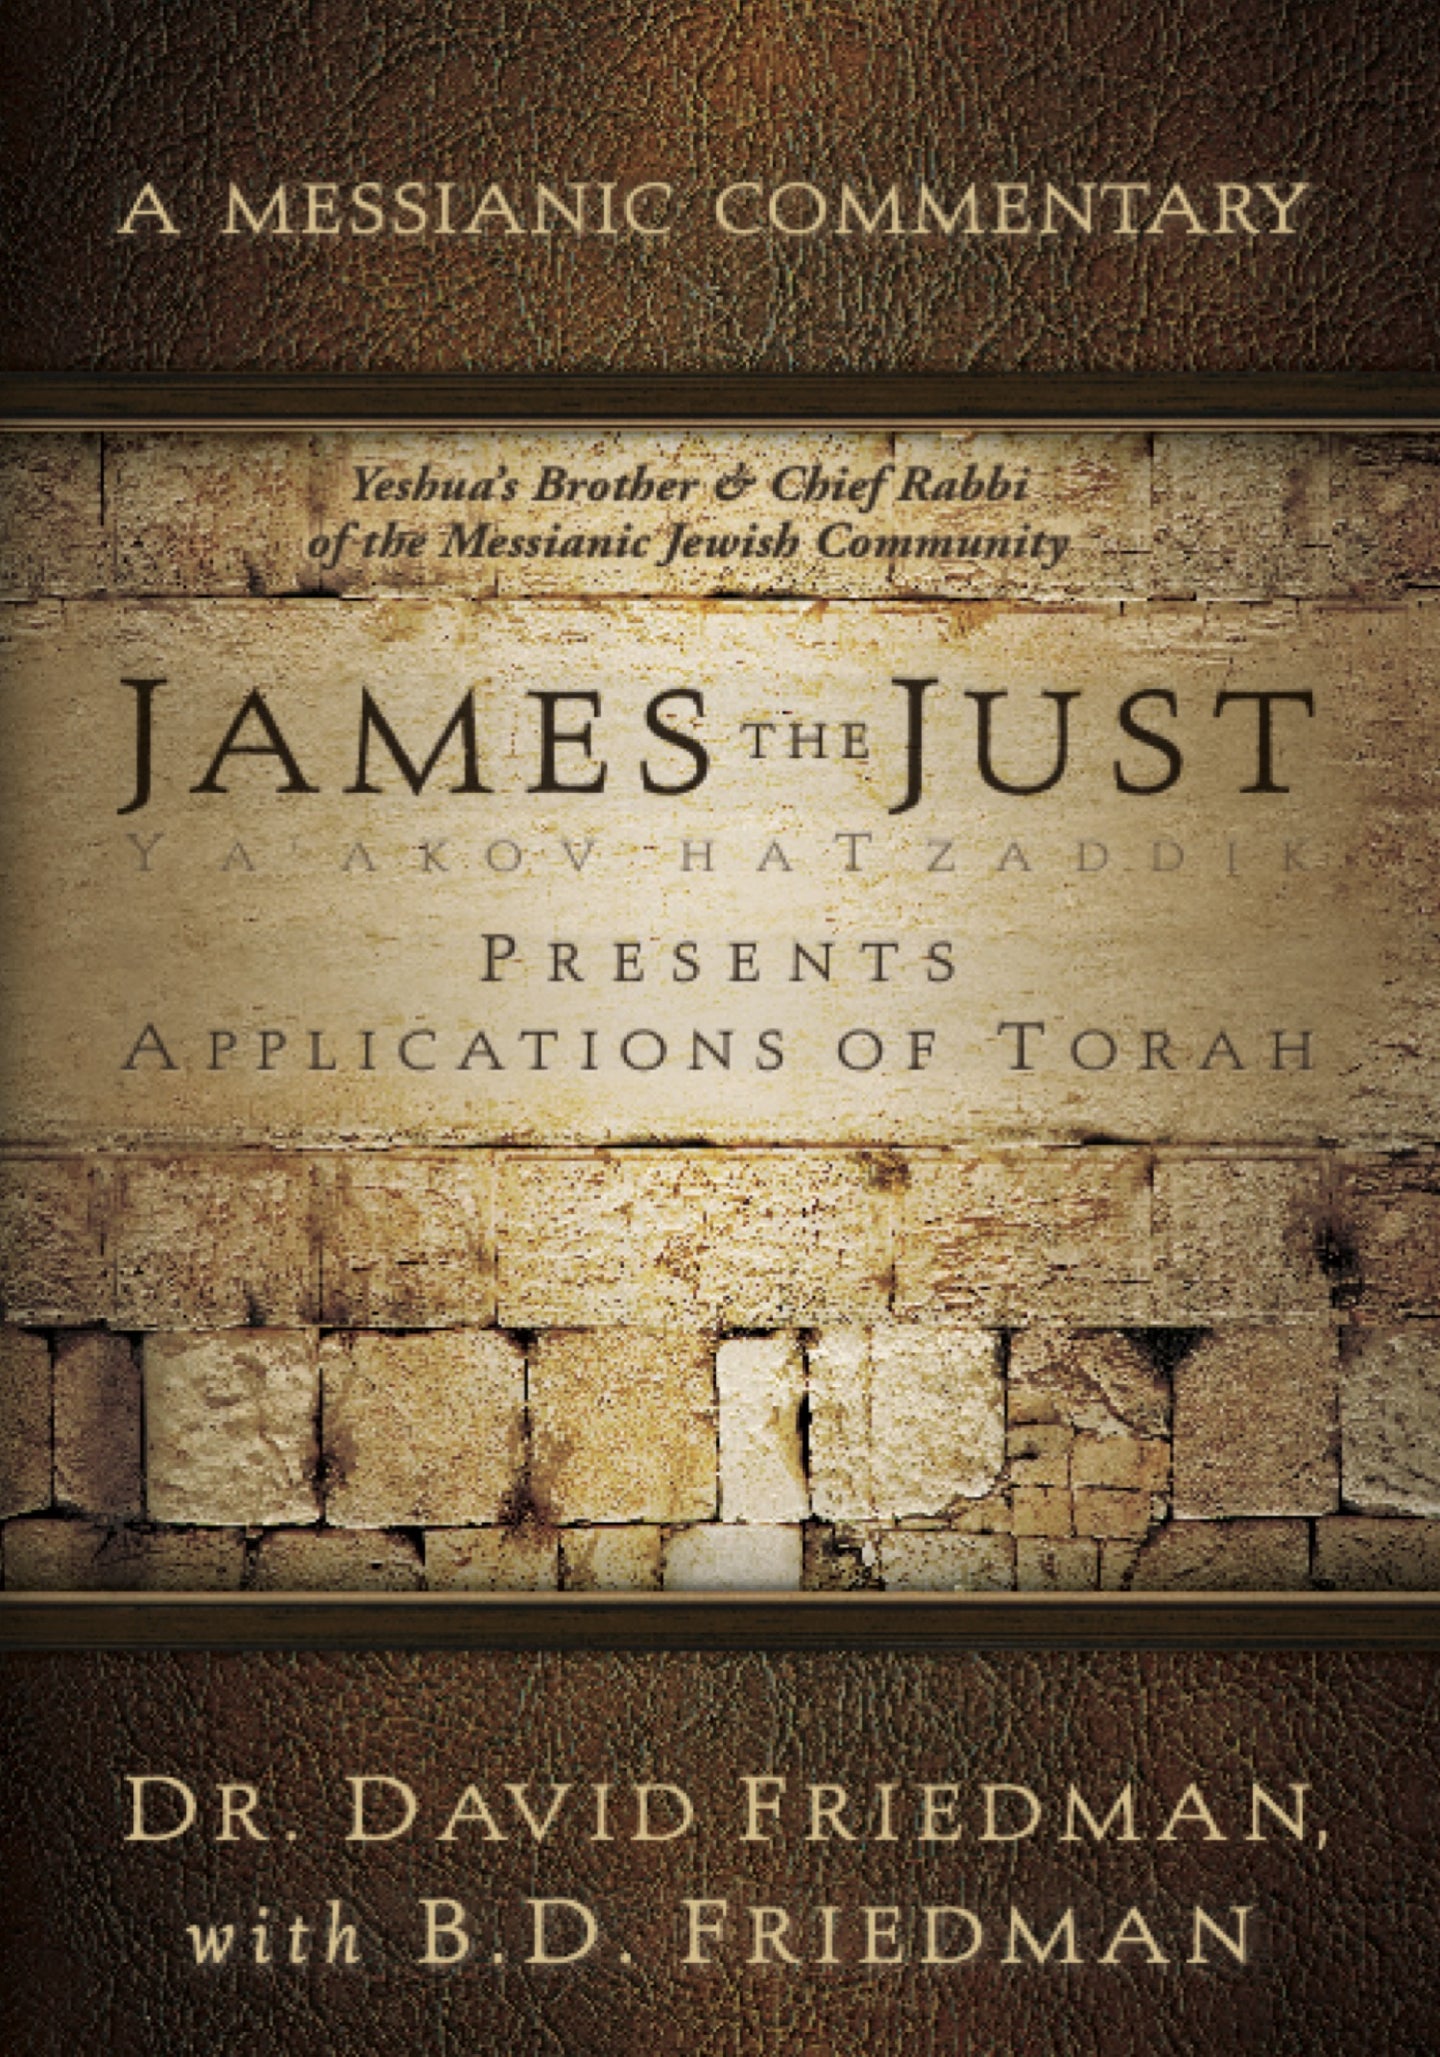 A Messianic Commentary - James the Just Presents Application of Torah by Dr. David Freidman & B.D. Friedman